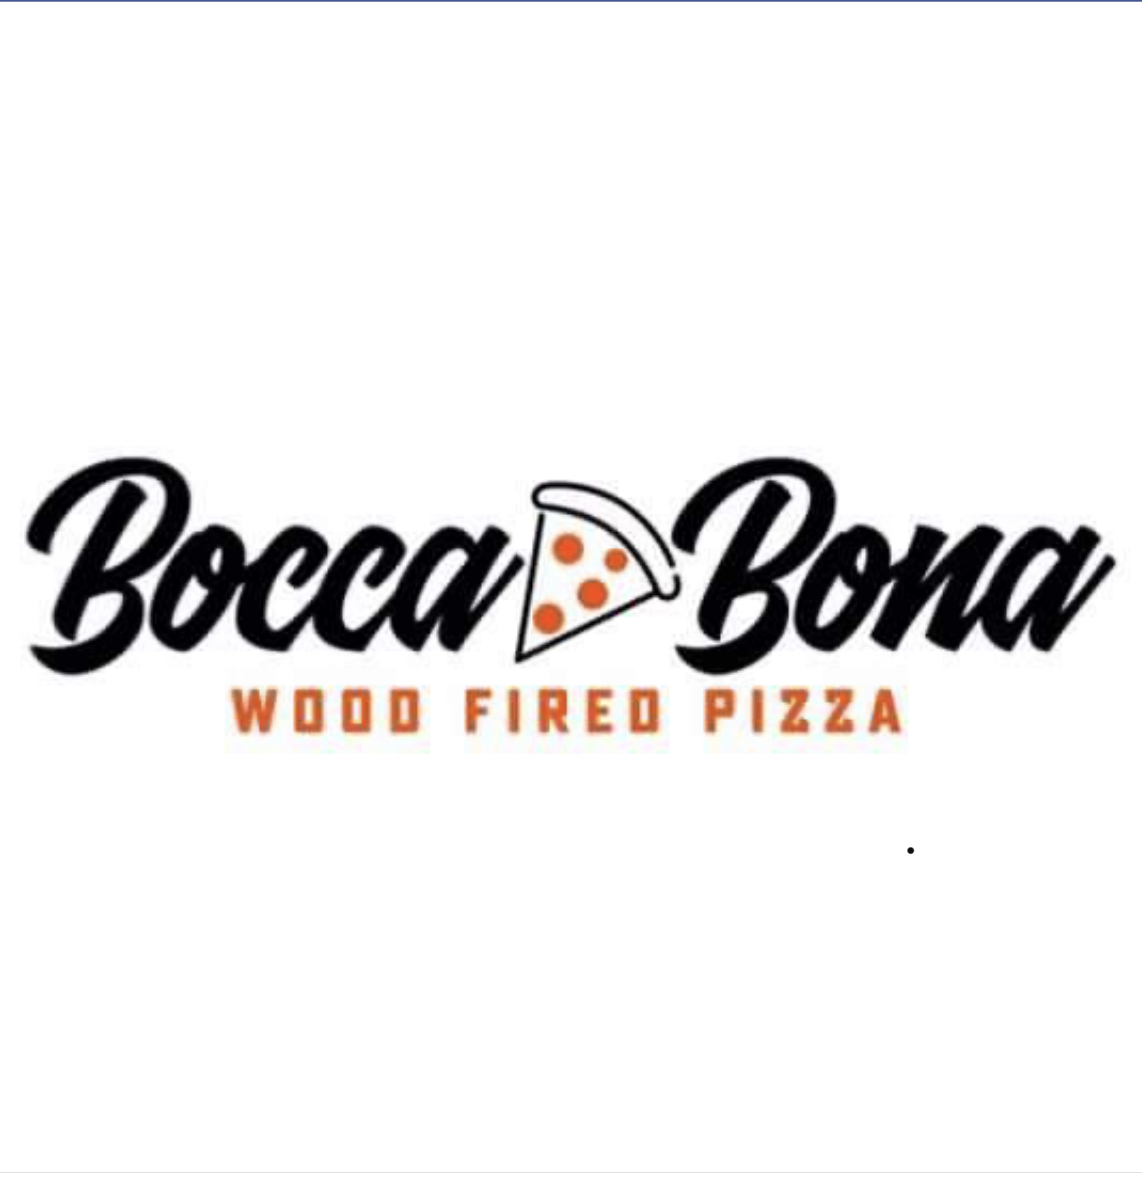 Bocca Bona Ltd.